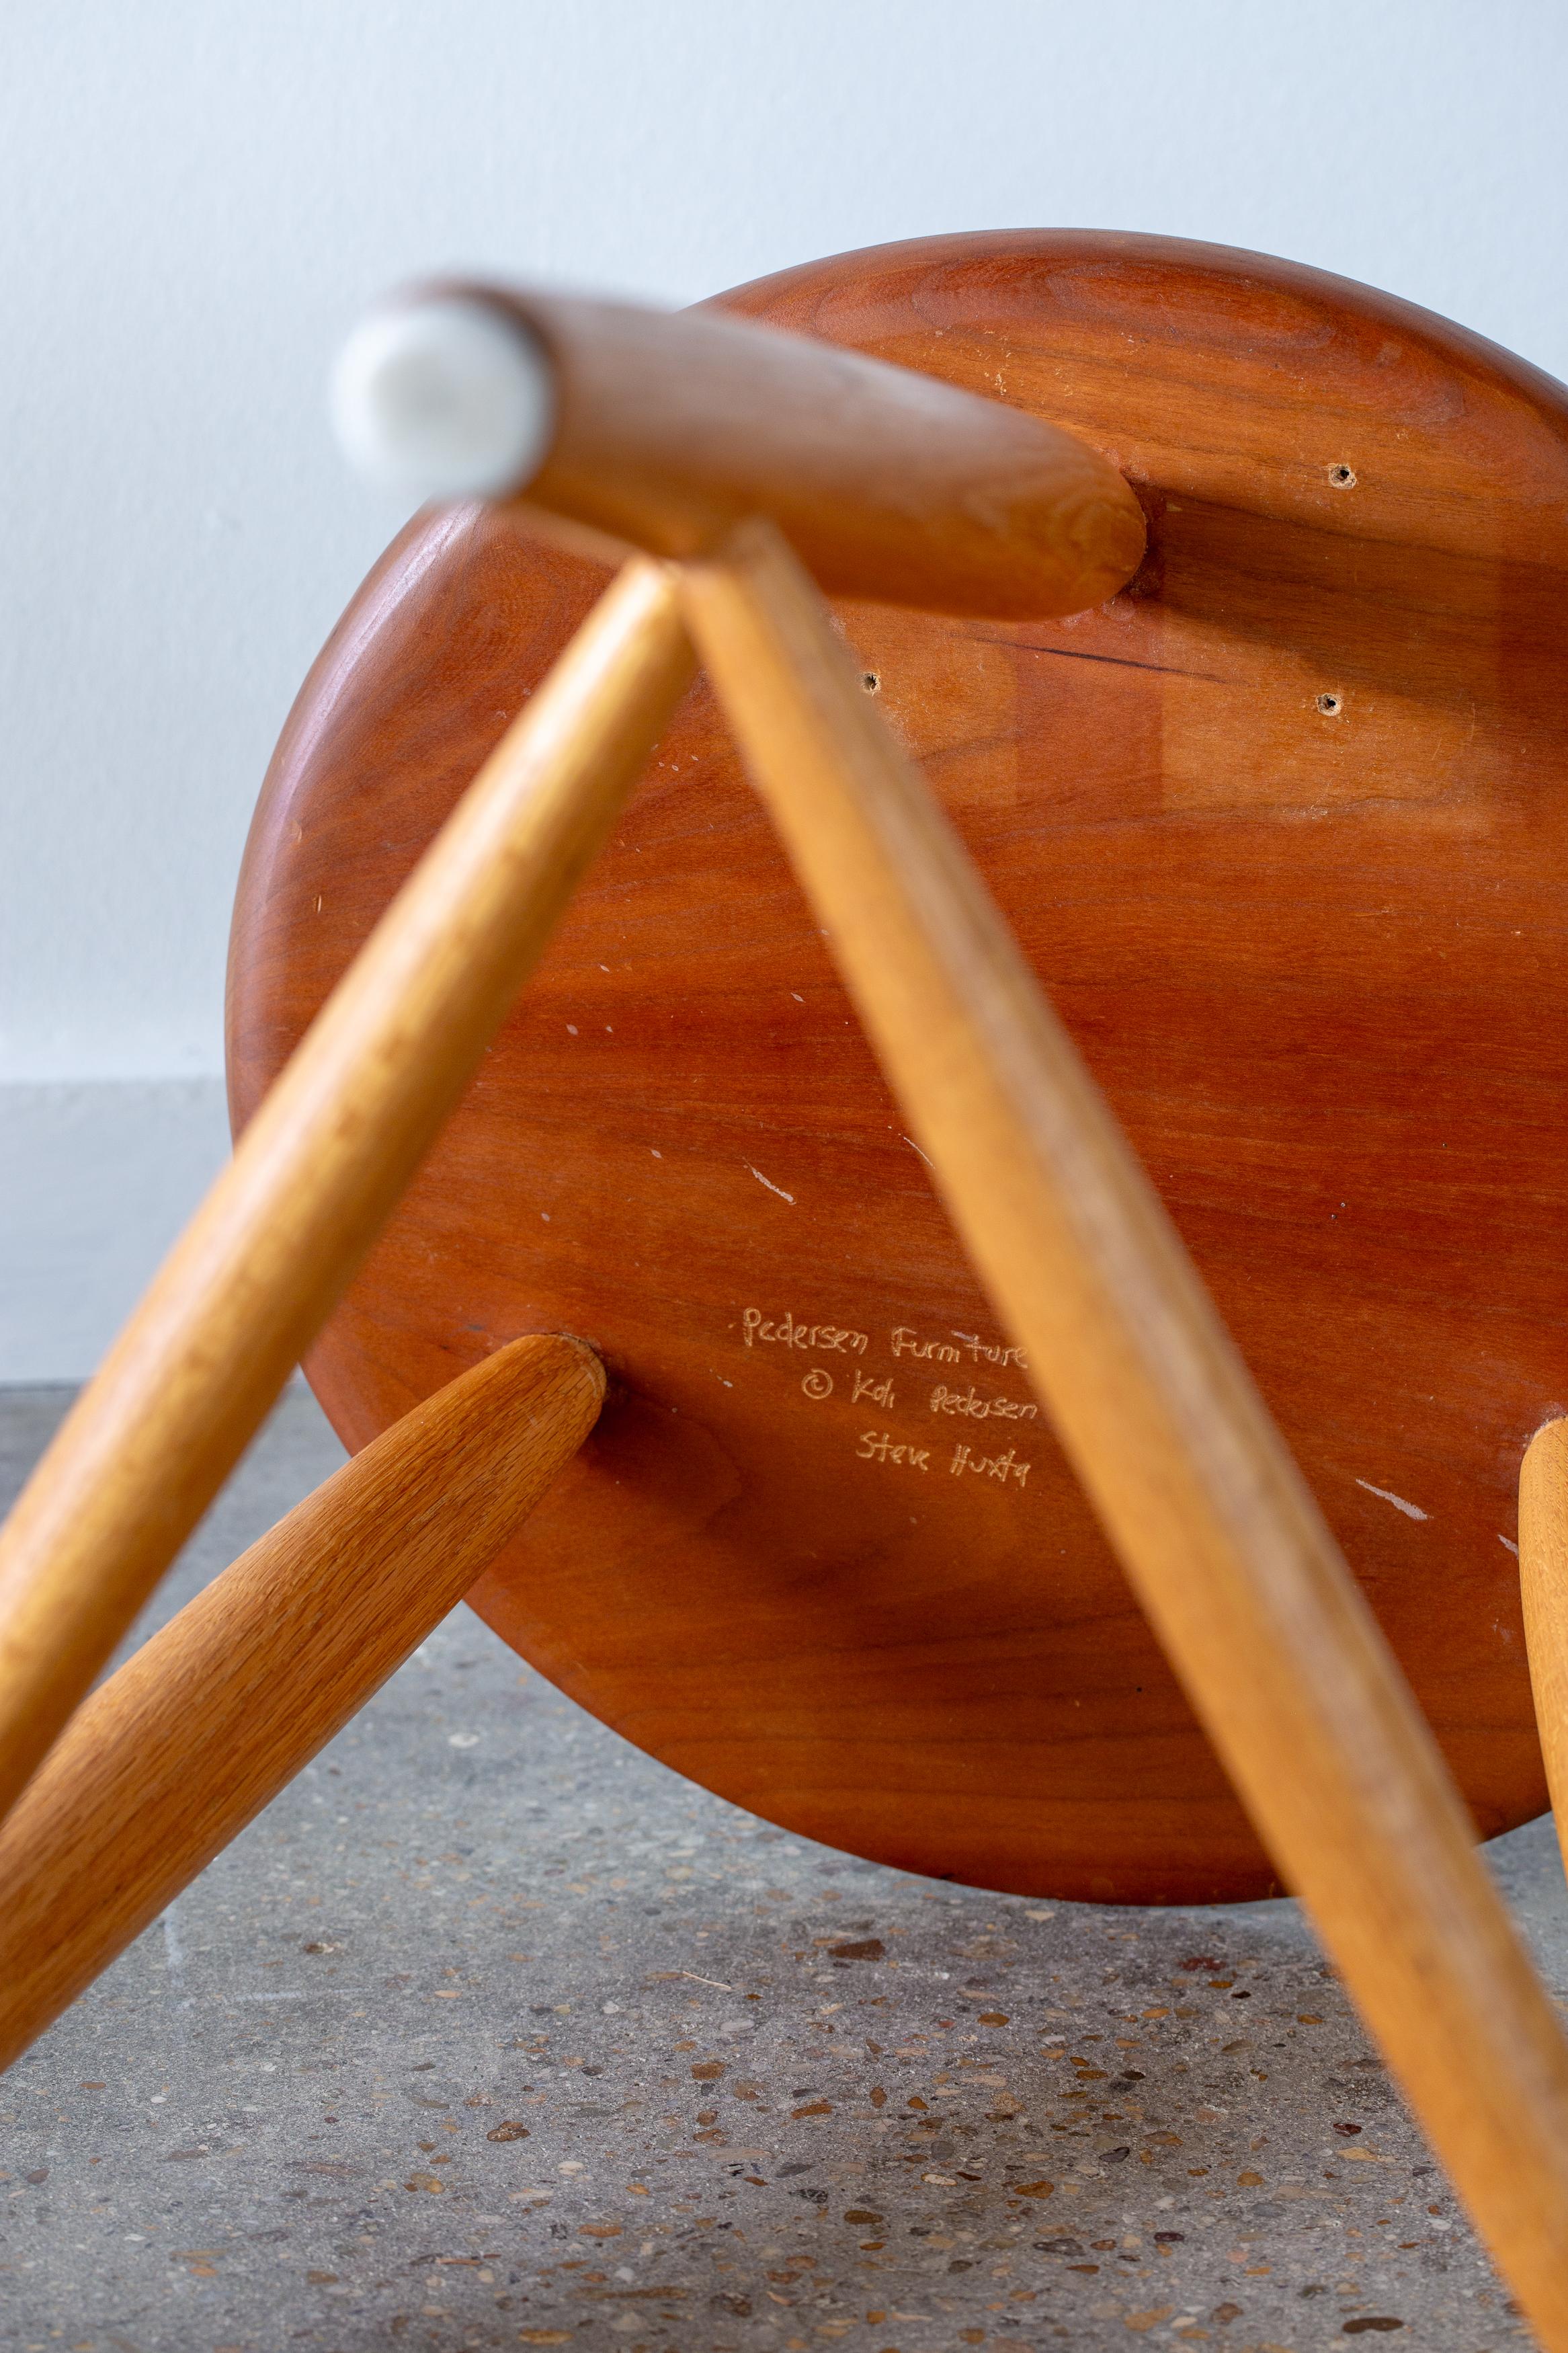 1980s Kai Pedersen Studio Craft Counter stools Ash Cherry - a pair For Sale 2